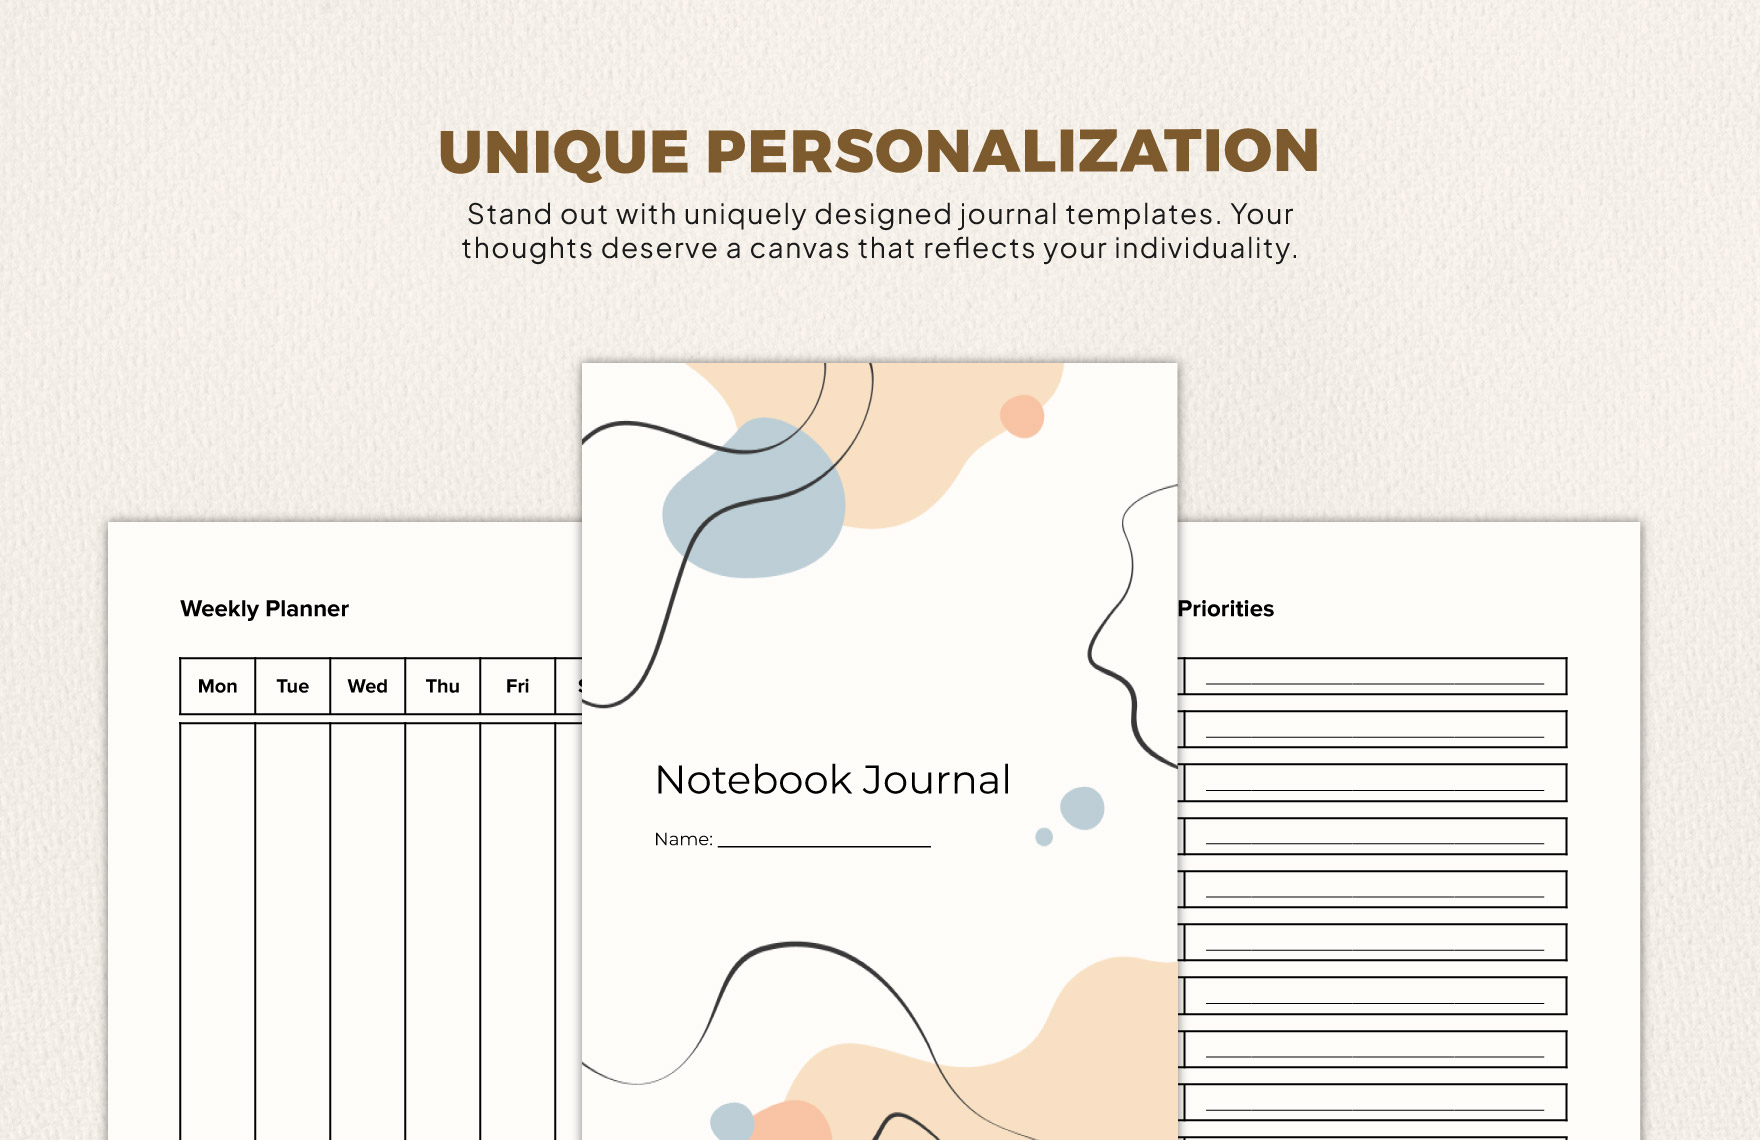 Notebook Journals for Mac Template